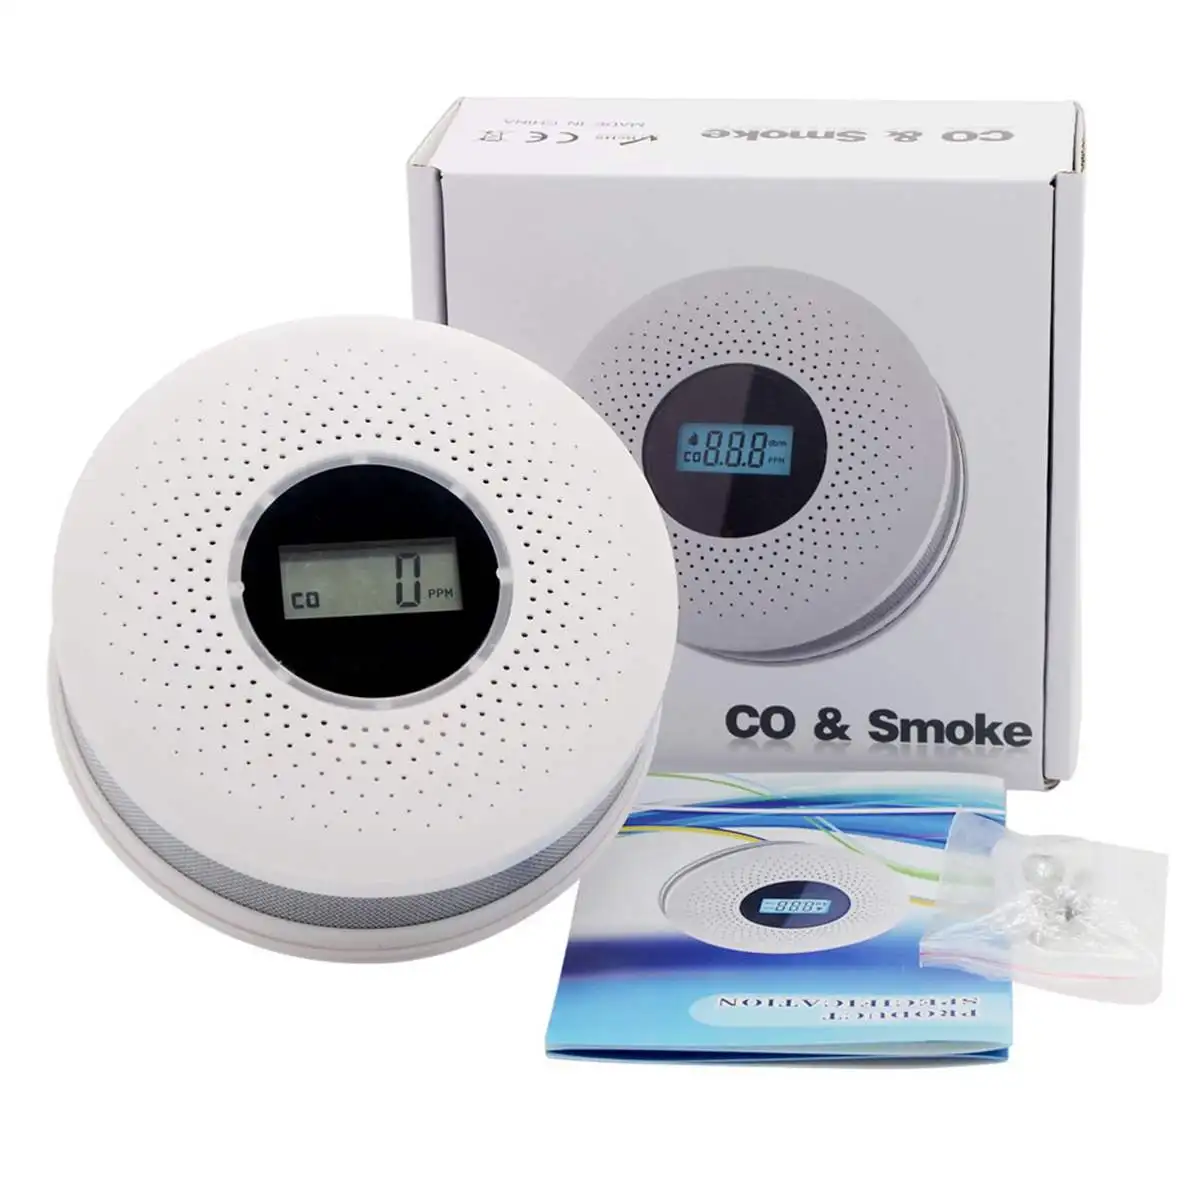 2 in 1 LED Digital Gas Smoke Alarm Co Carbon Monoxide Detector Voice Warn Sensor Home Security Protection High Sensitive